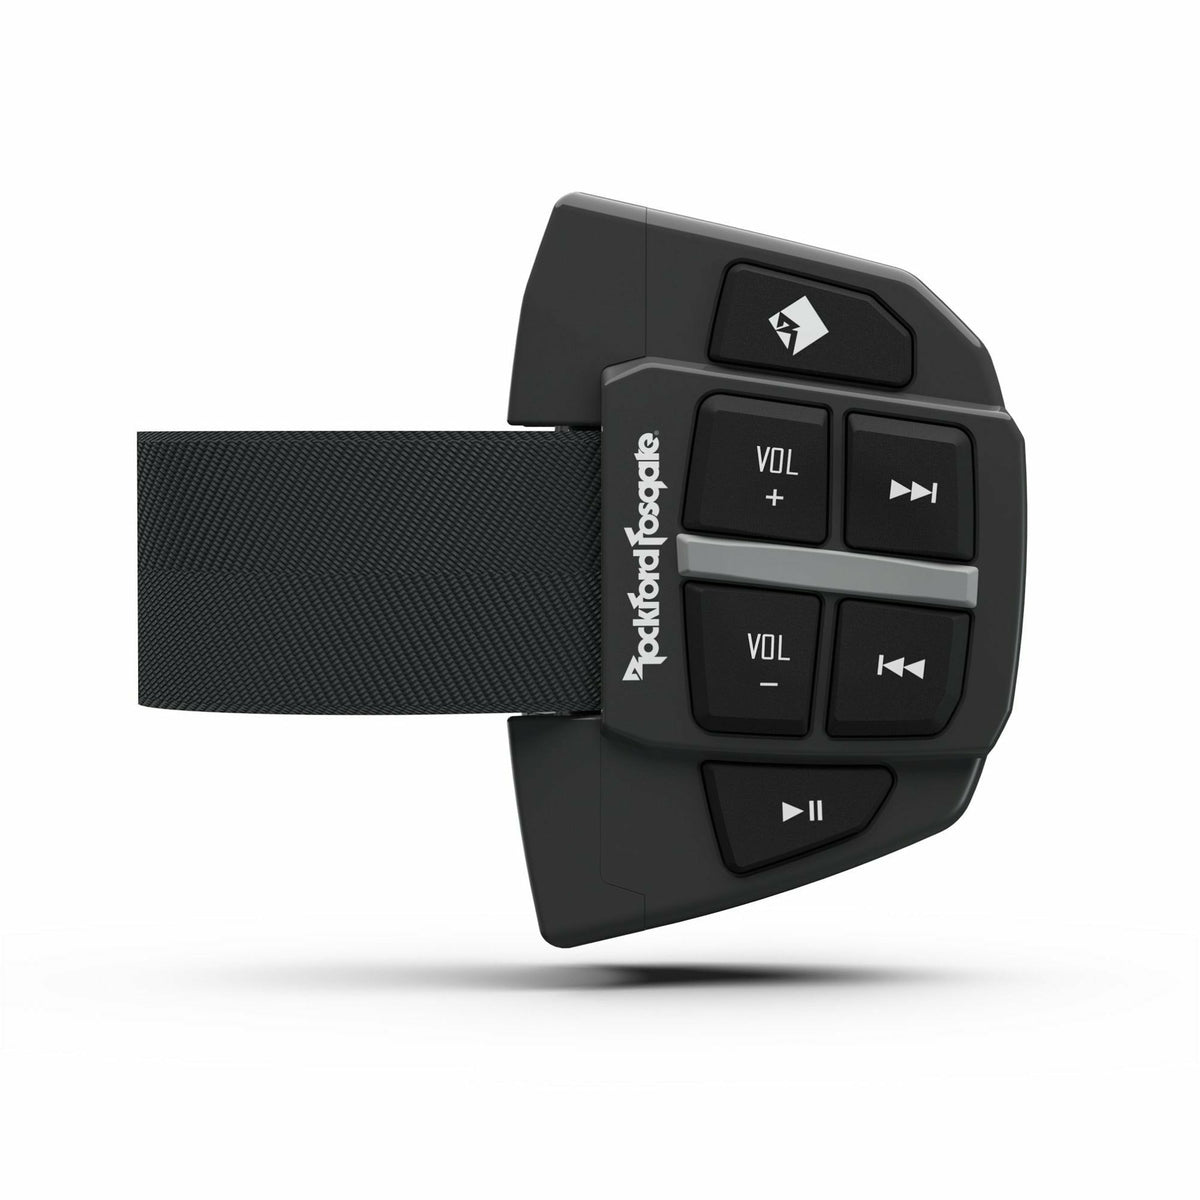 Rockford Fosgate Bluetooth Universal Remote - Kombustion Motorsports